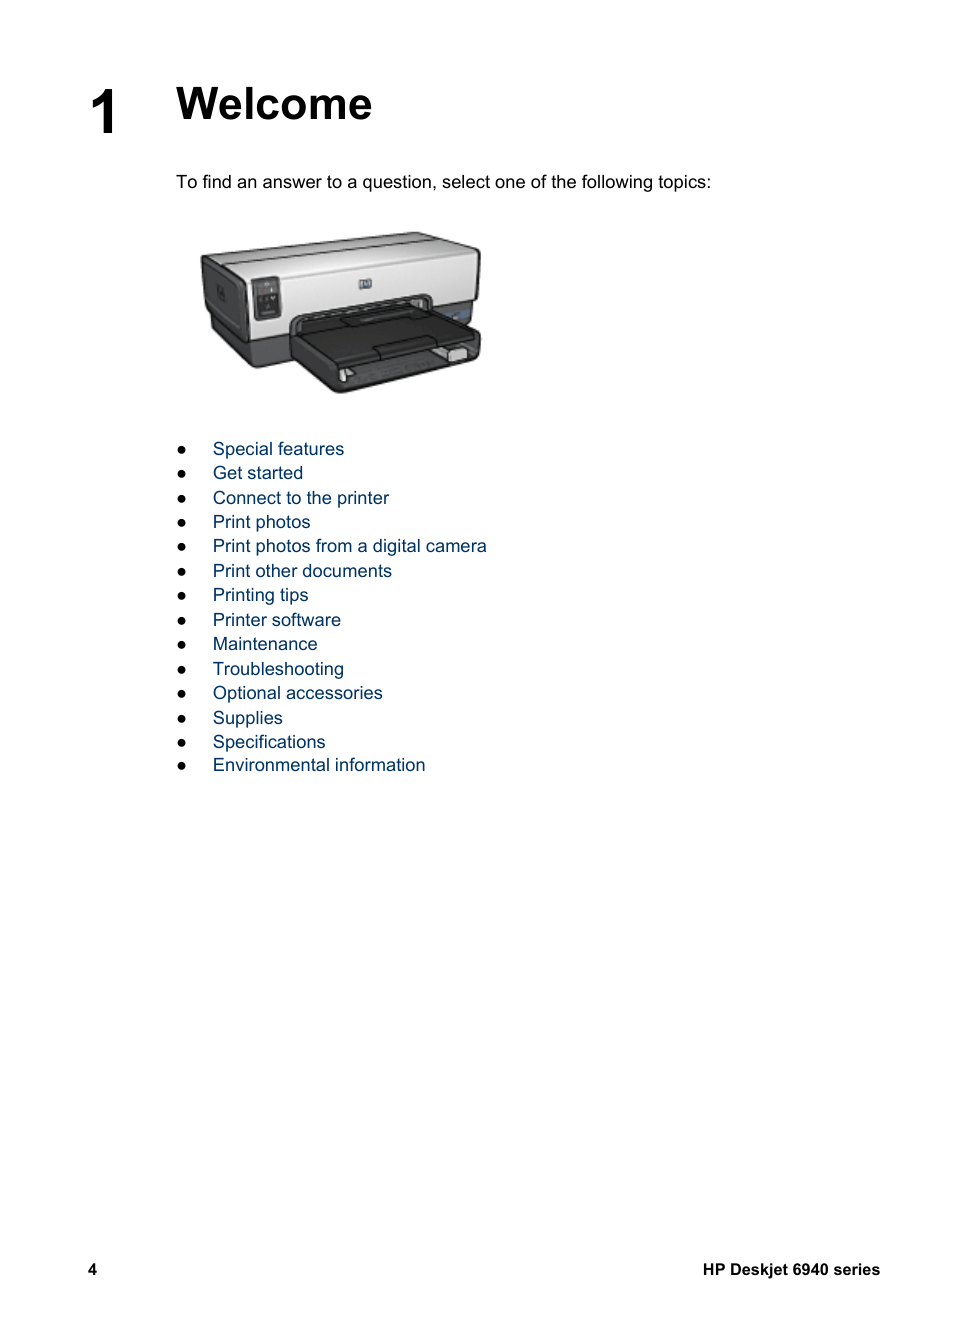 Welcome | HP Deskjet 6940 User Manual | Page 6 / 150